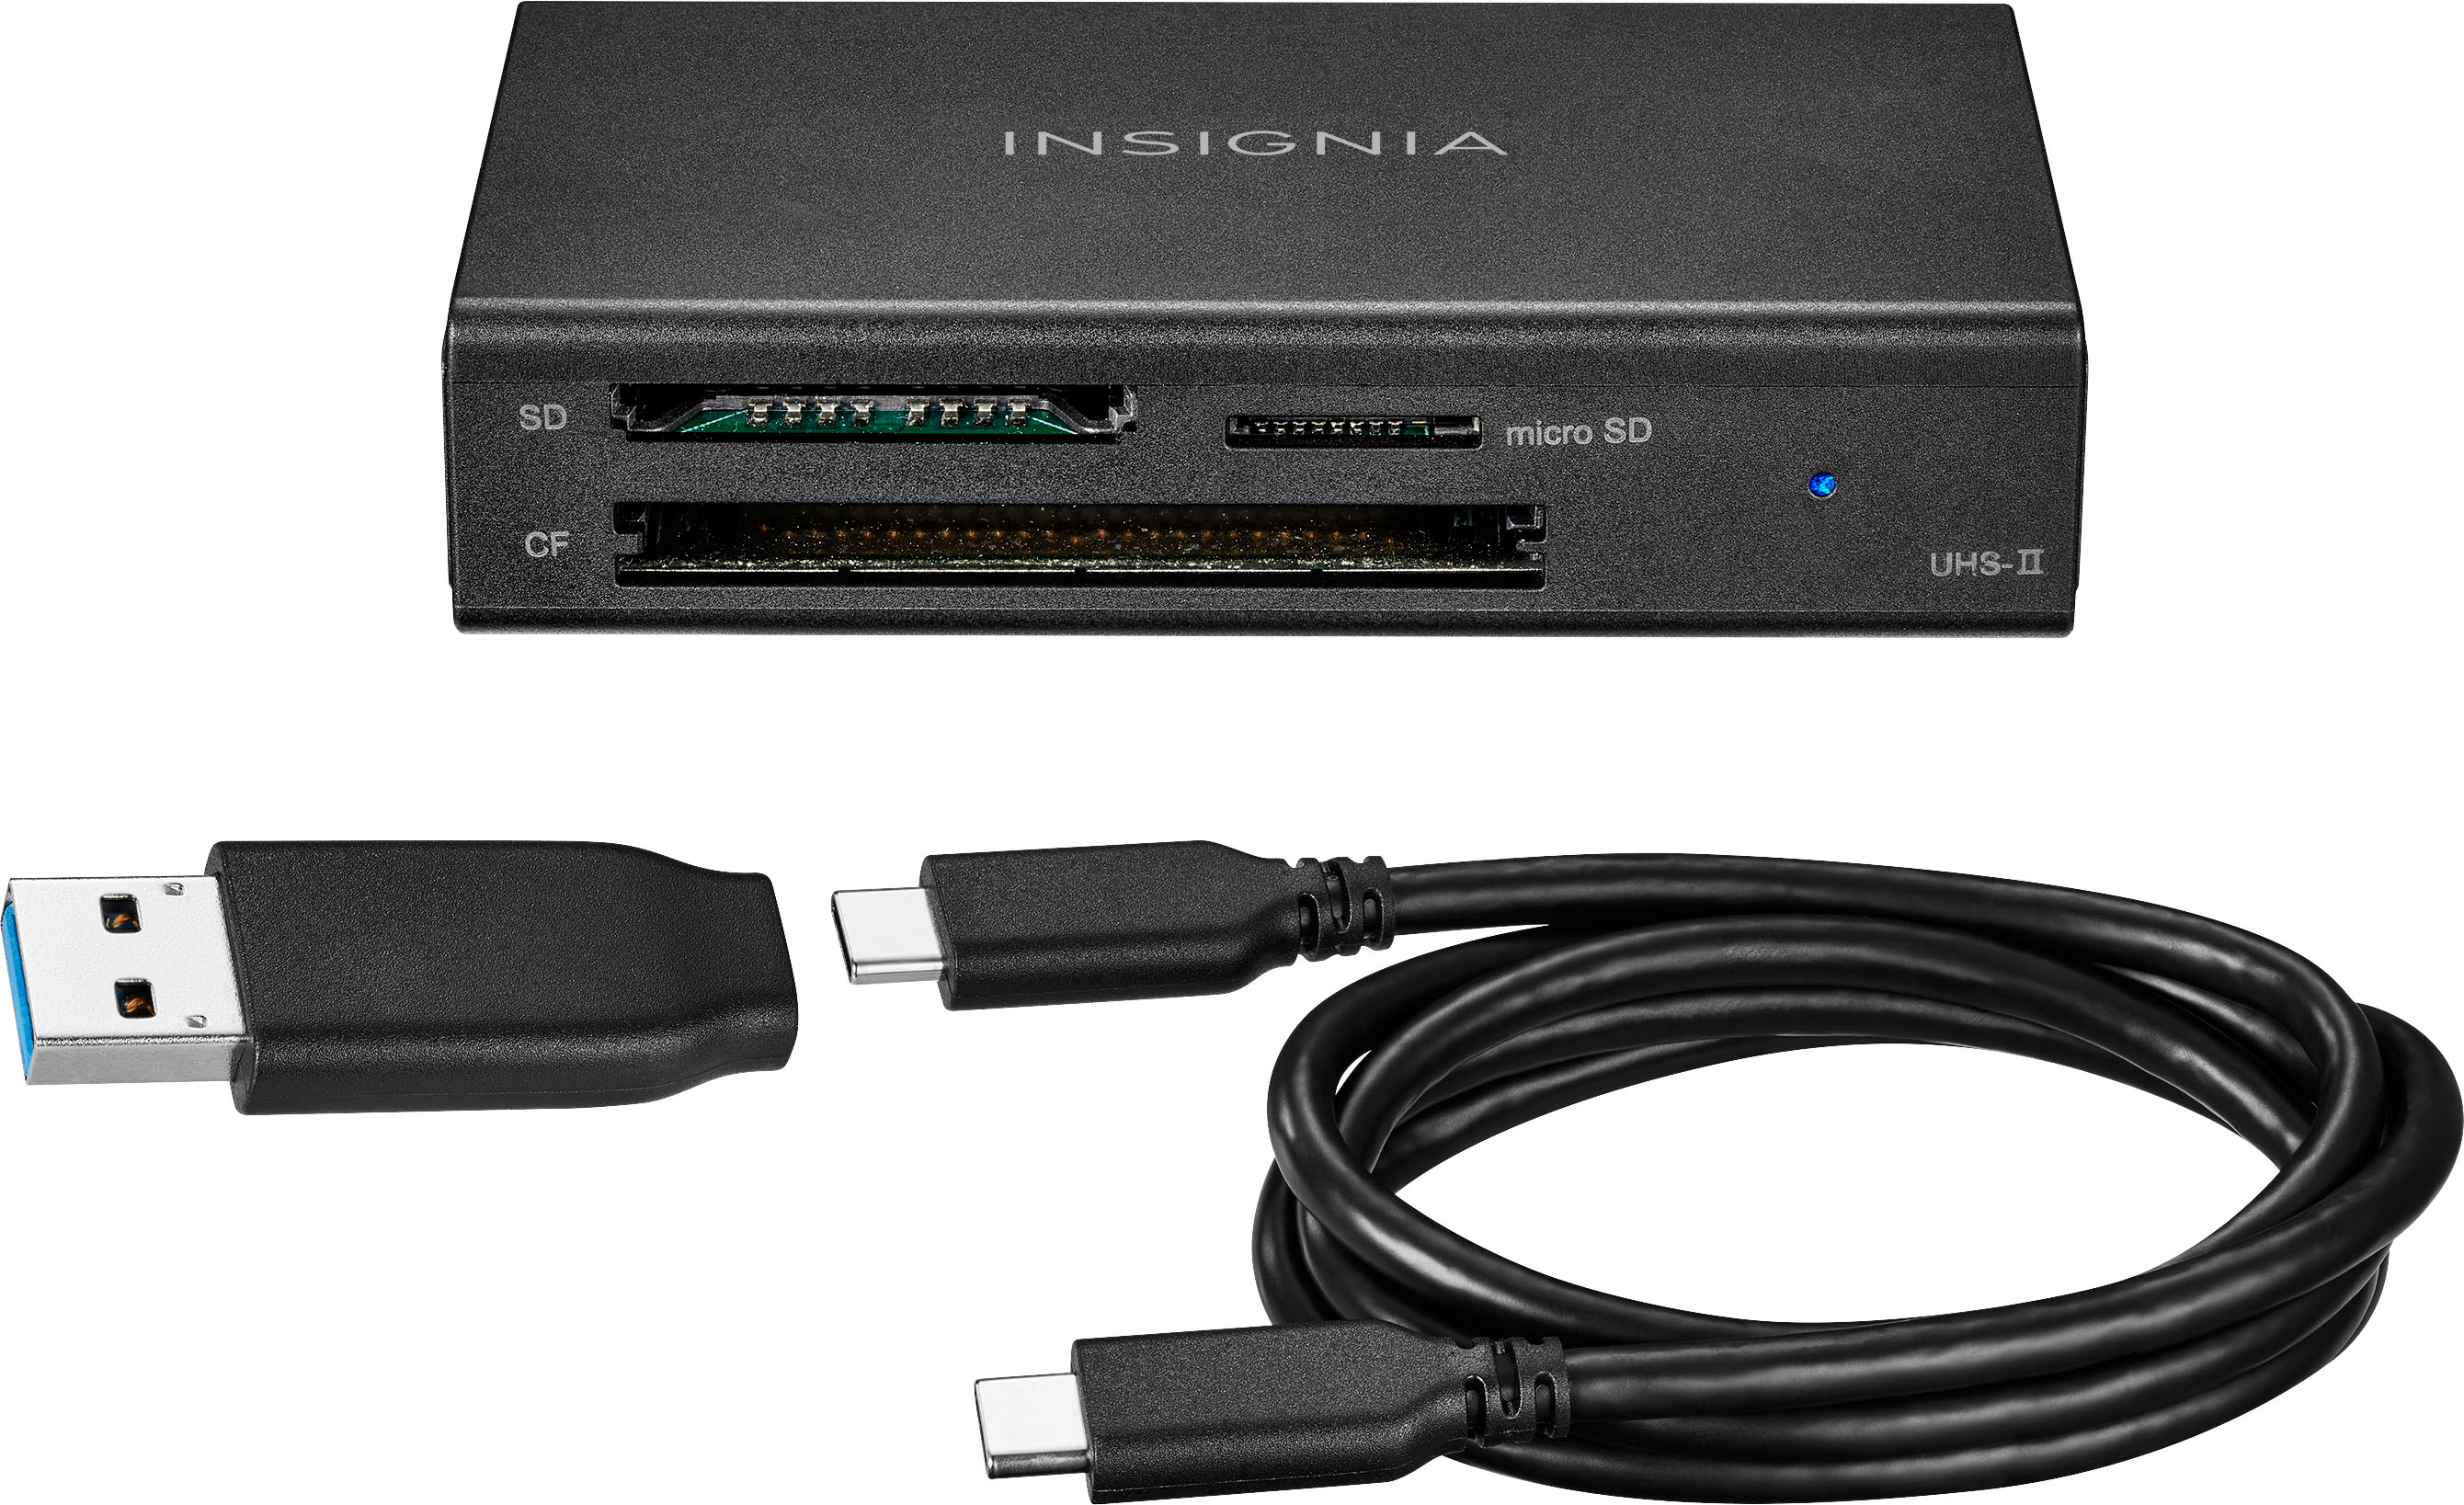 Insignia - USB-C to SD, microSD and CompactFlash Memory Card Reader - Black